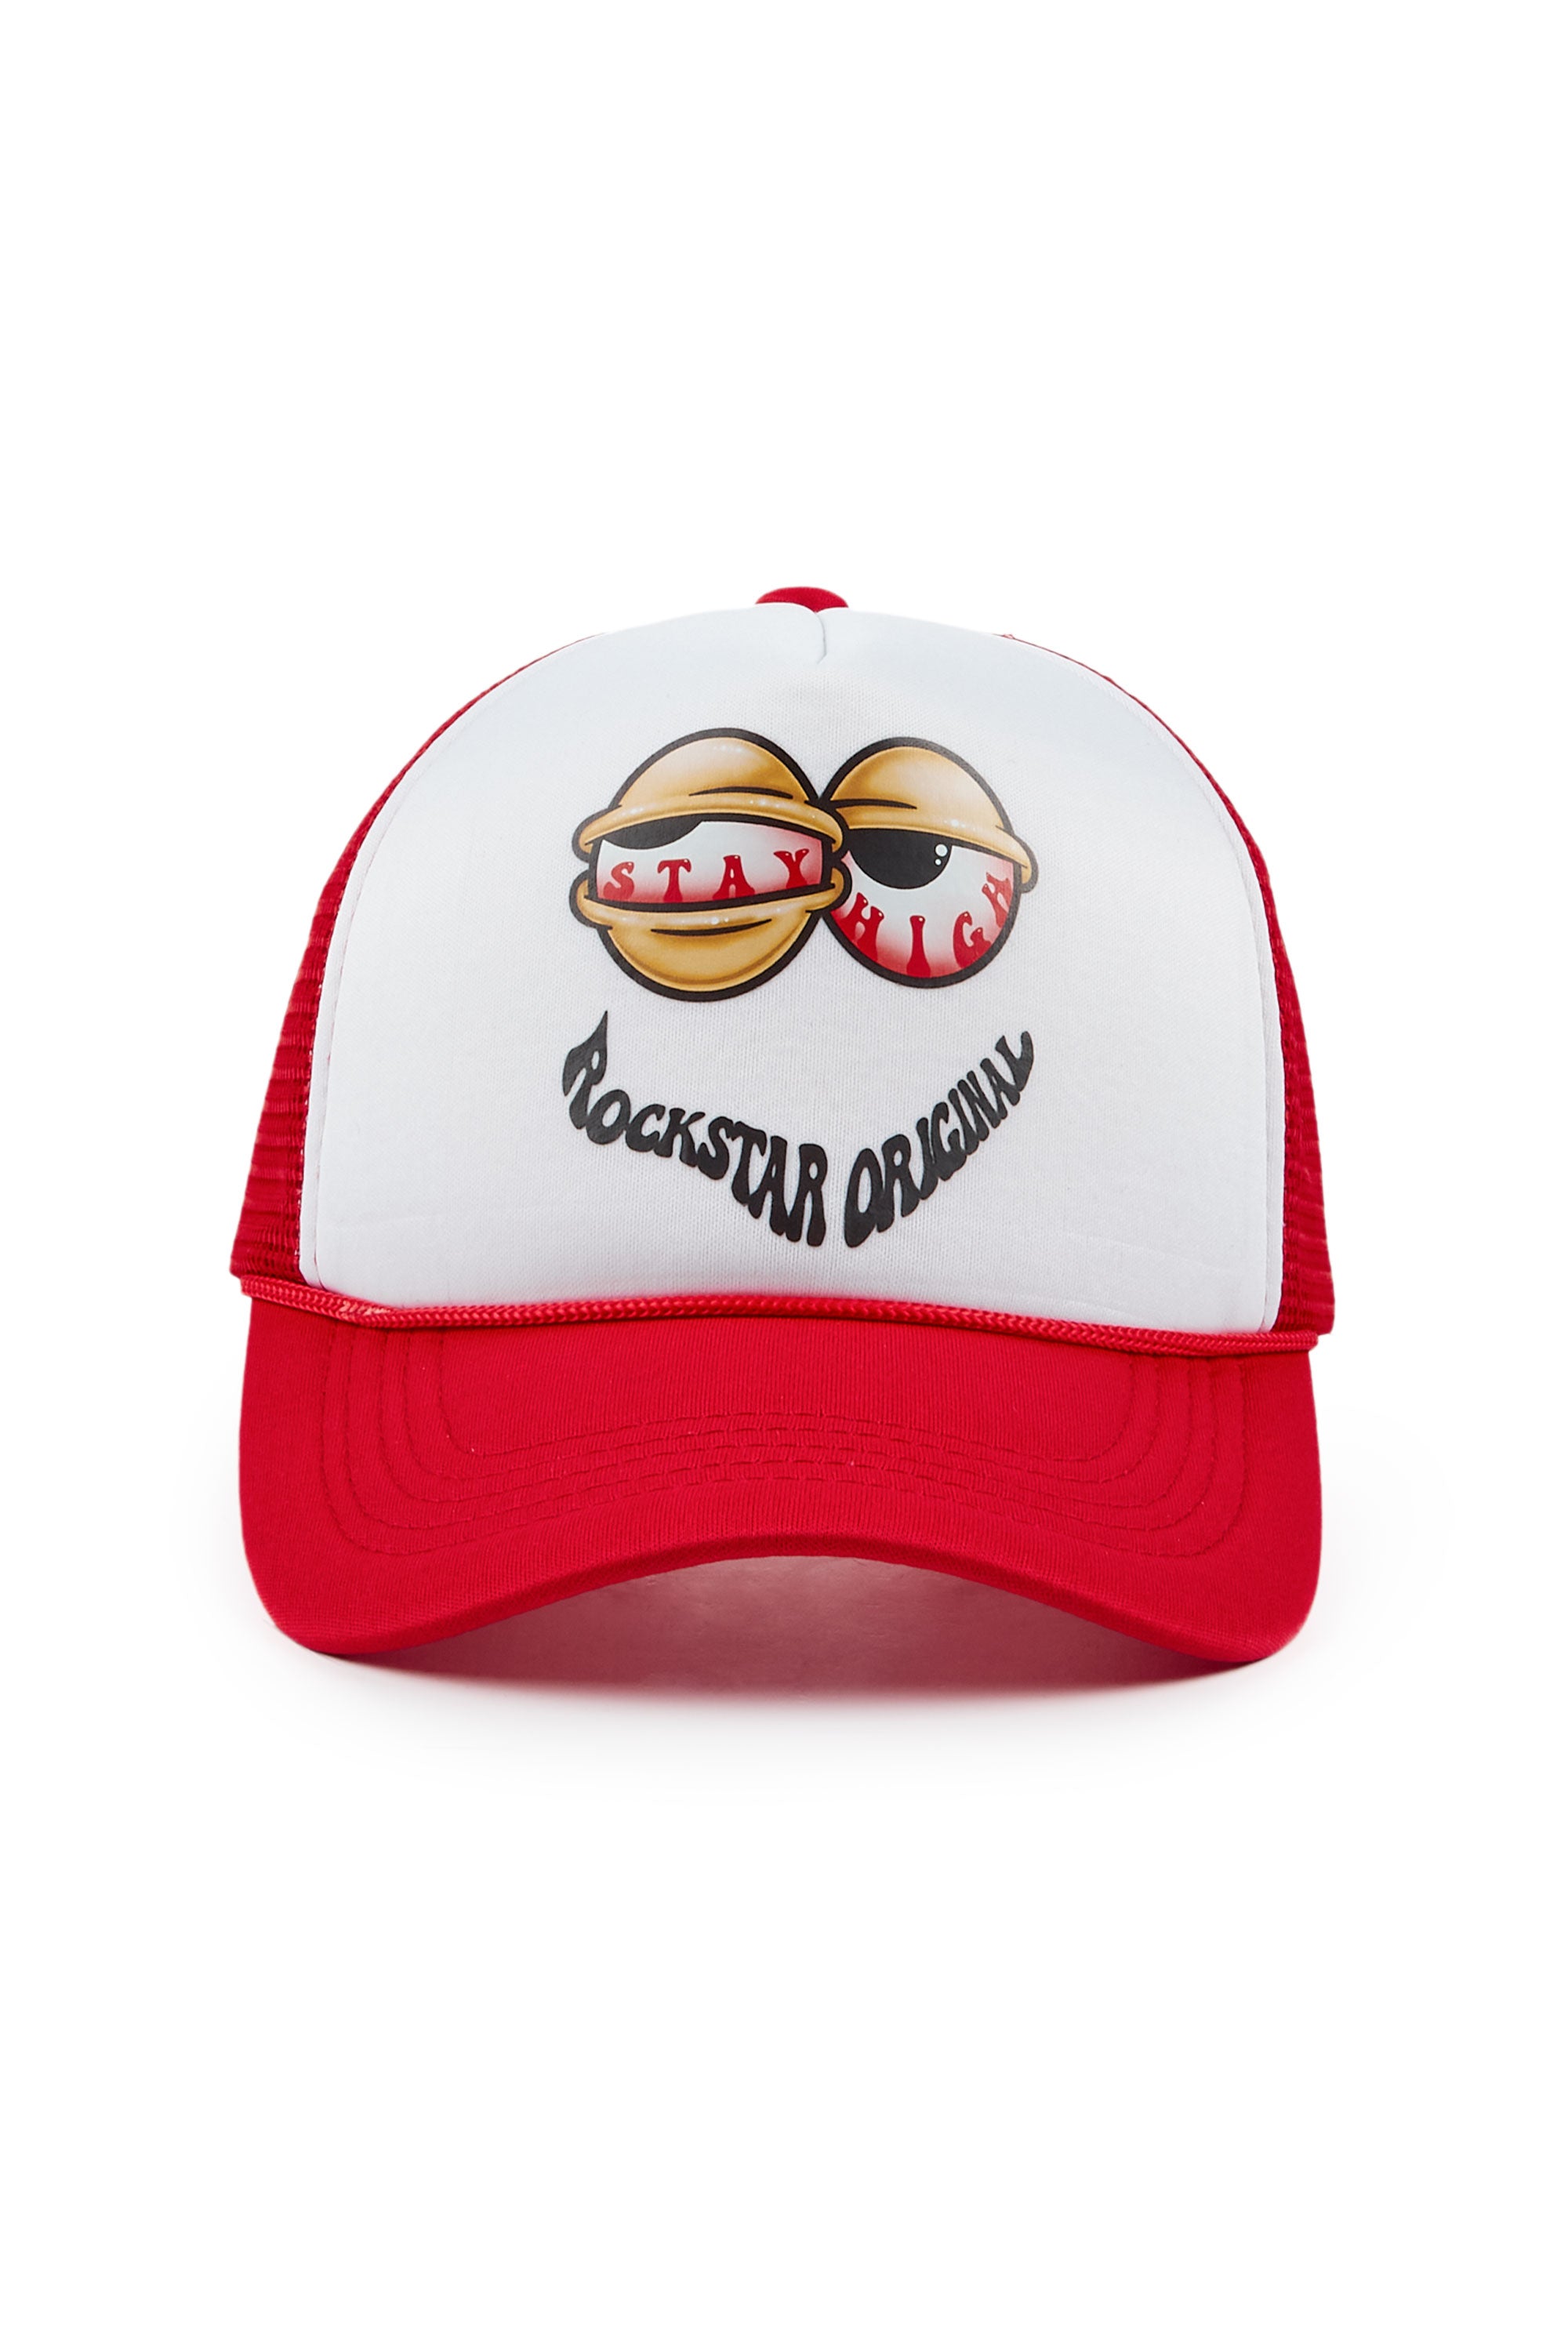 Highya White/Red Trucker Hat